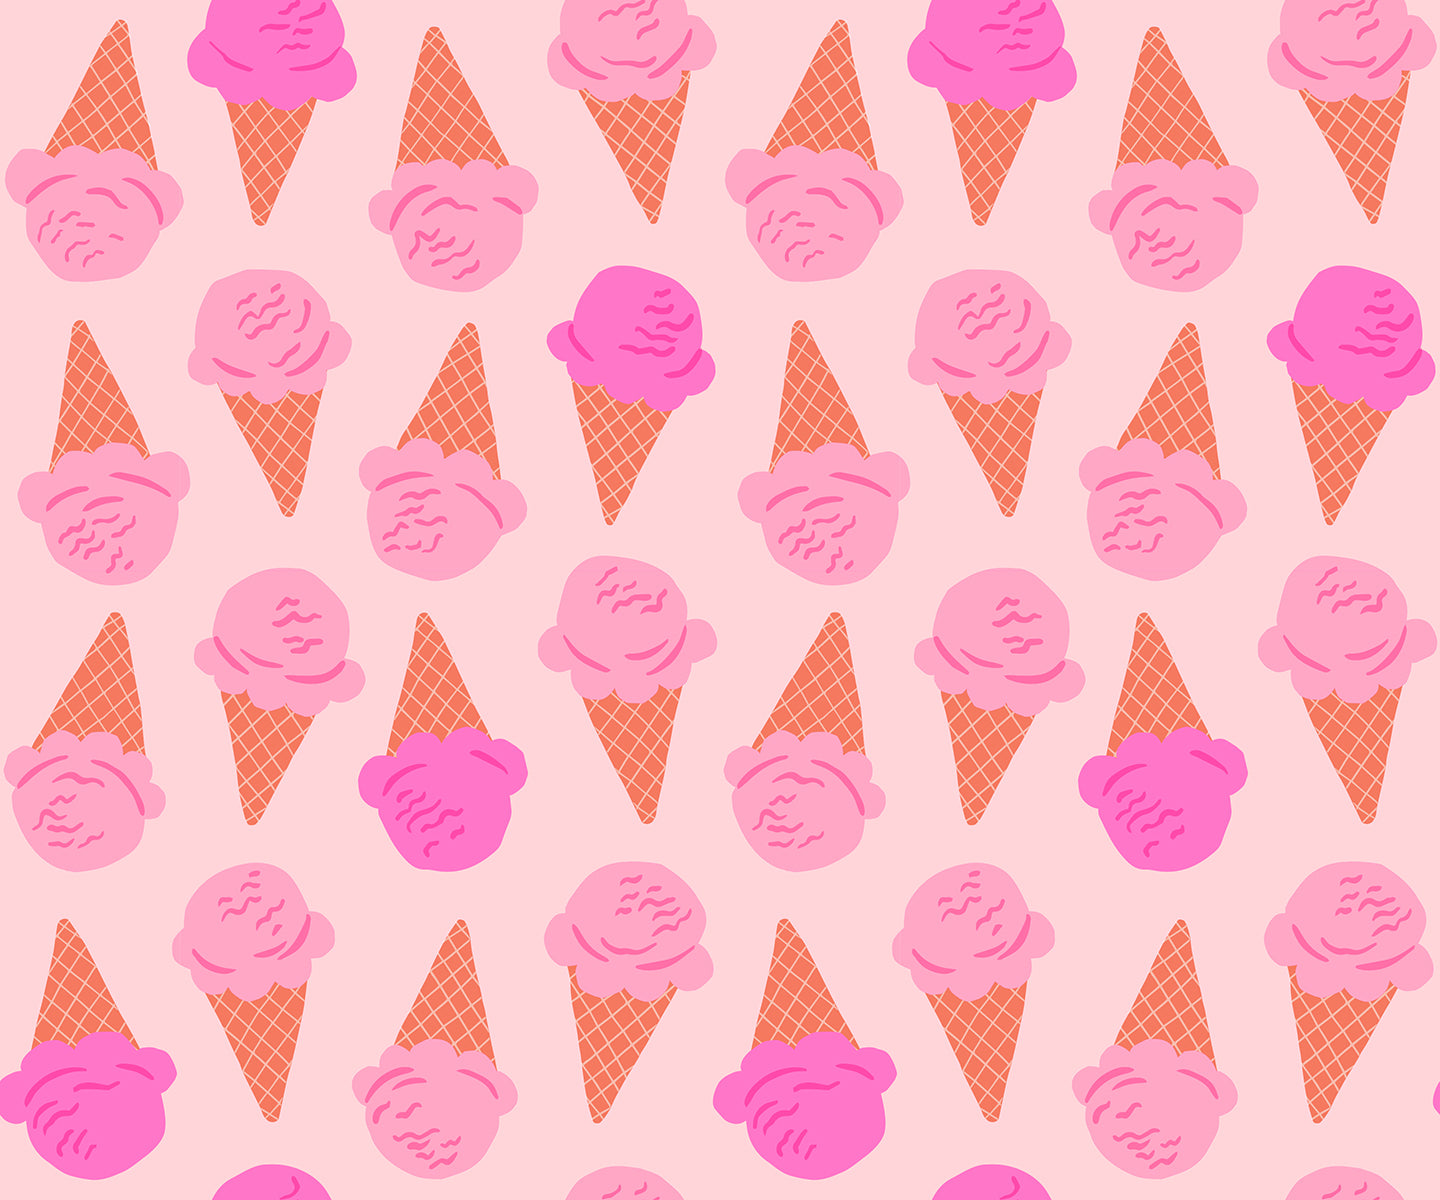 Sugar Cone Cotton Candy Pink Ice Cream